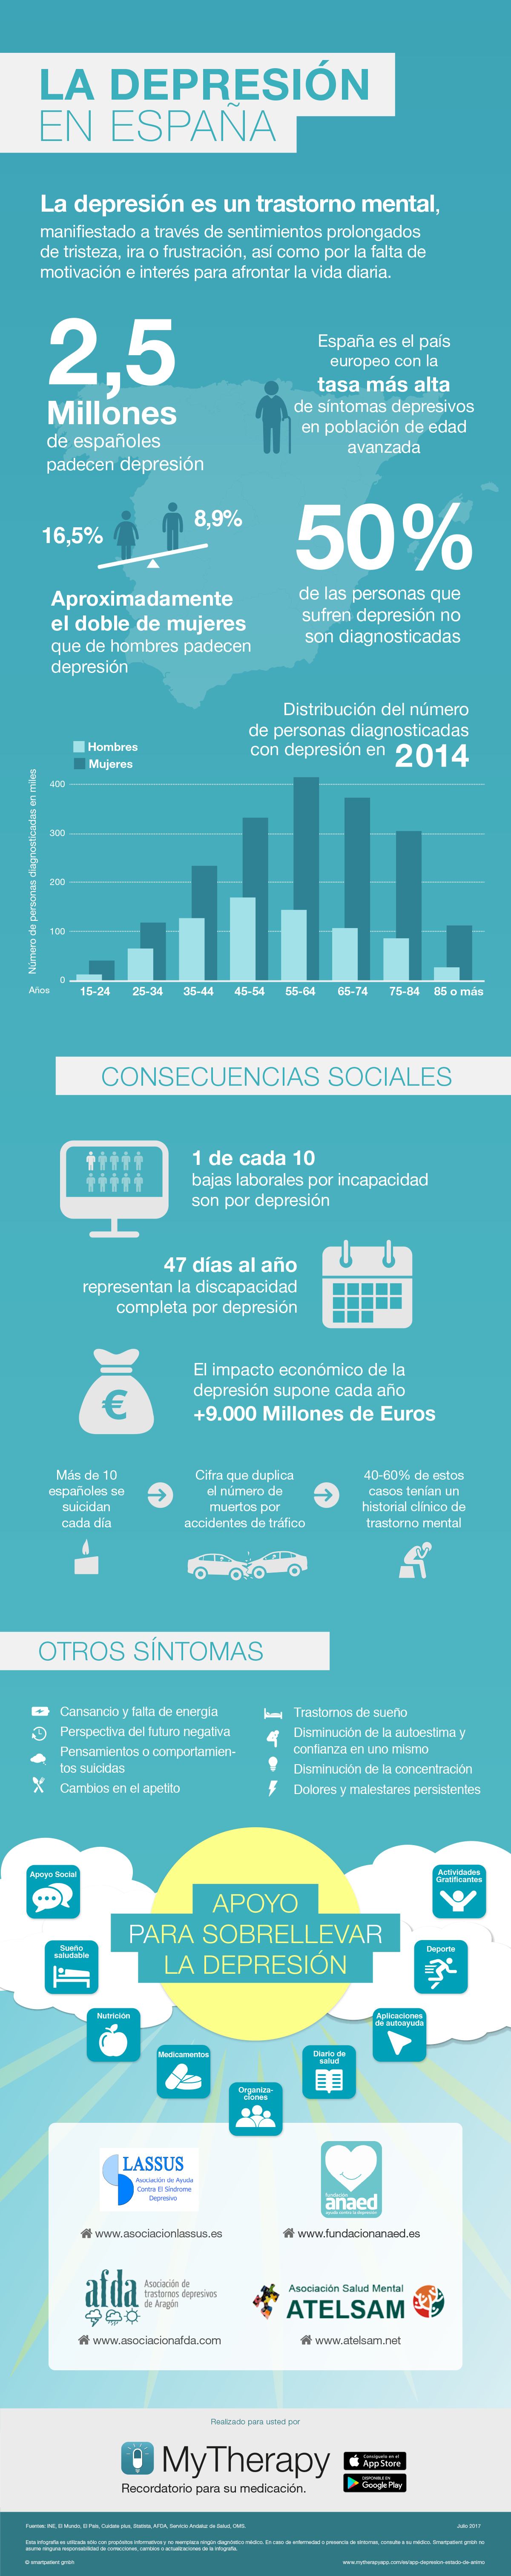 Infografía sobre la Depresión en España